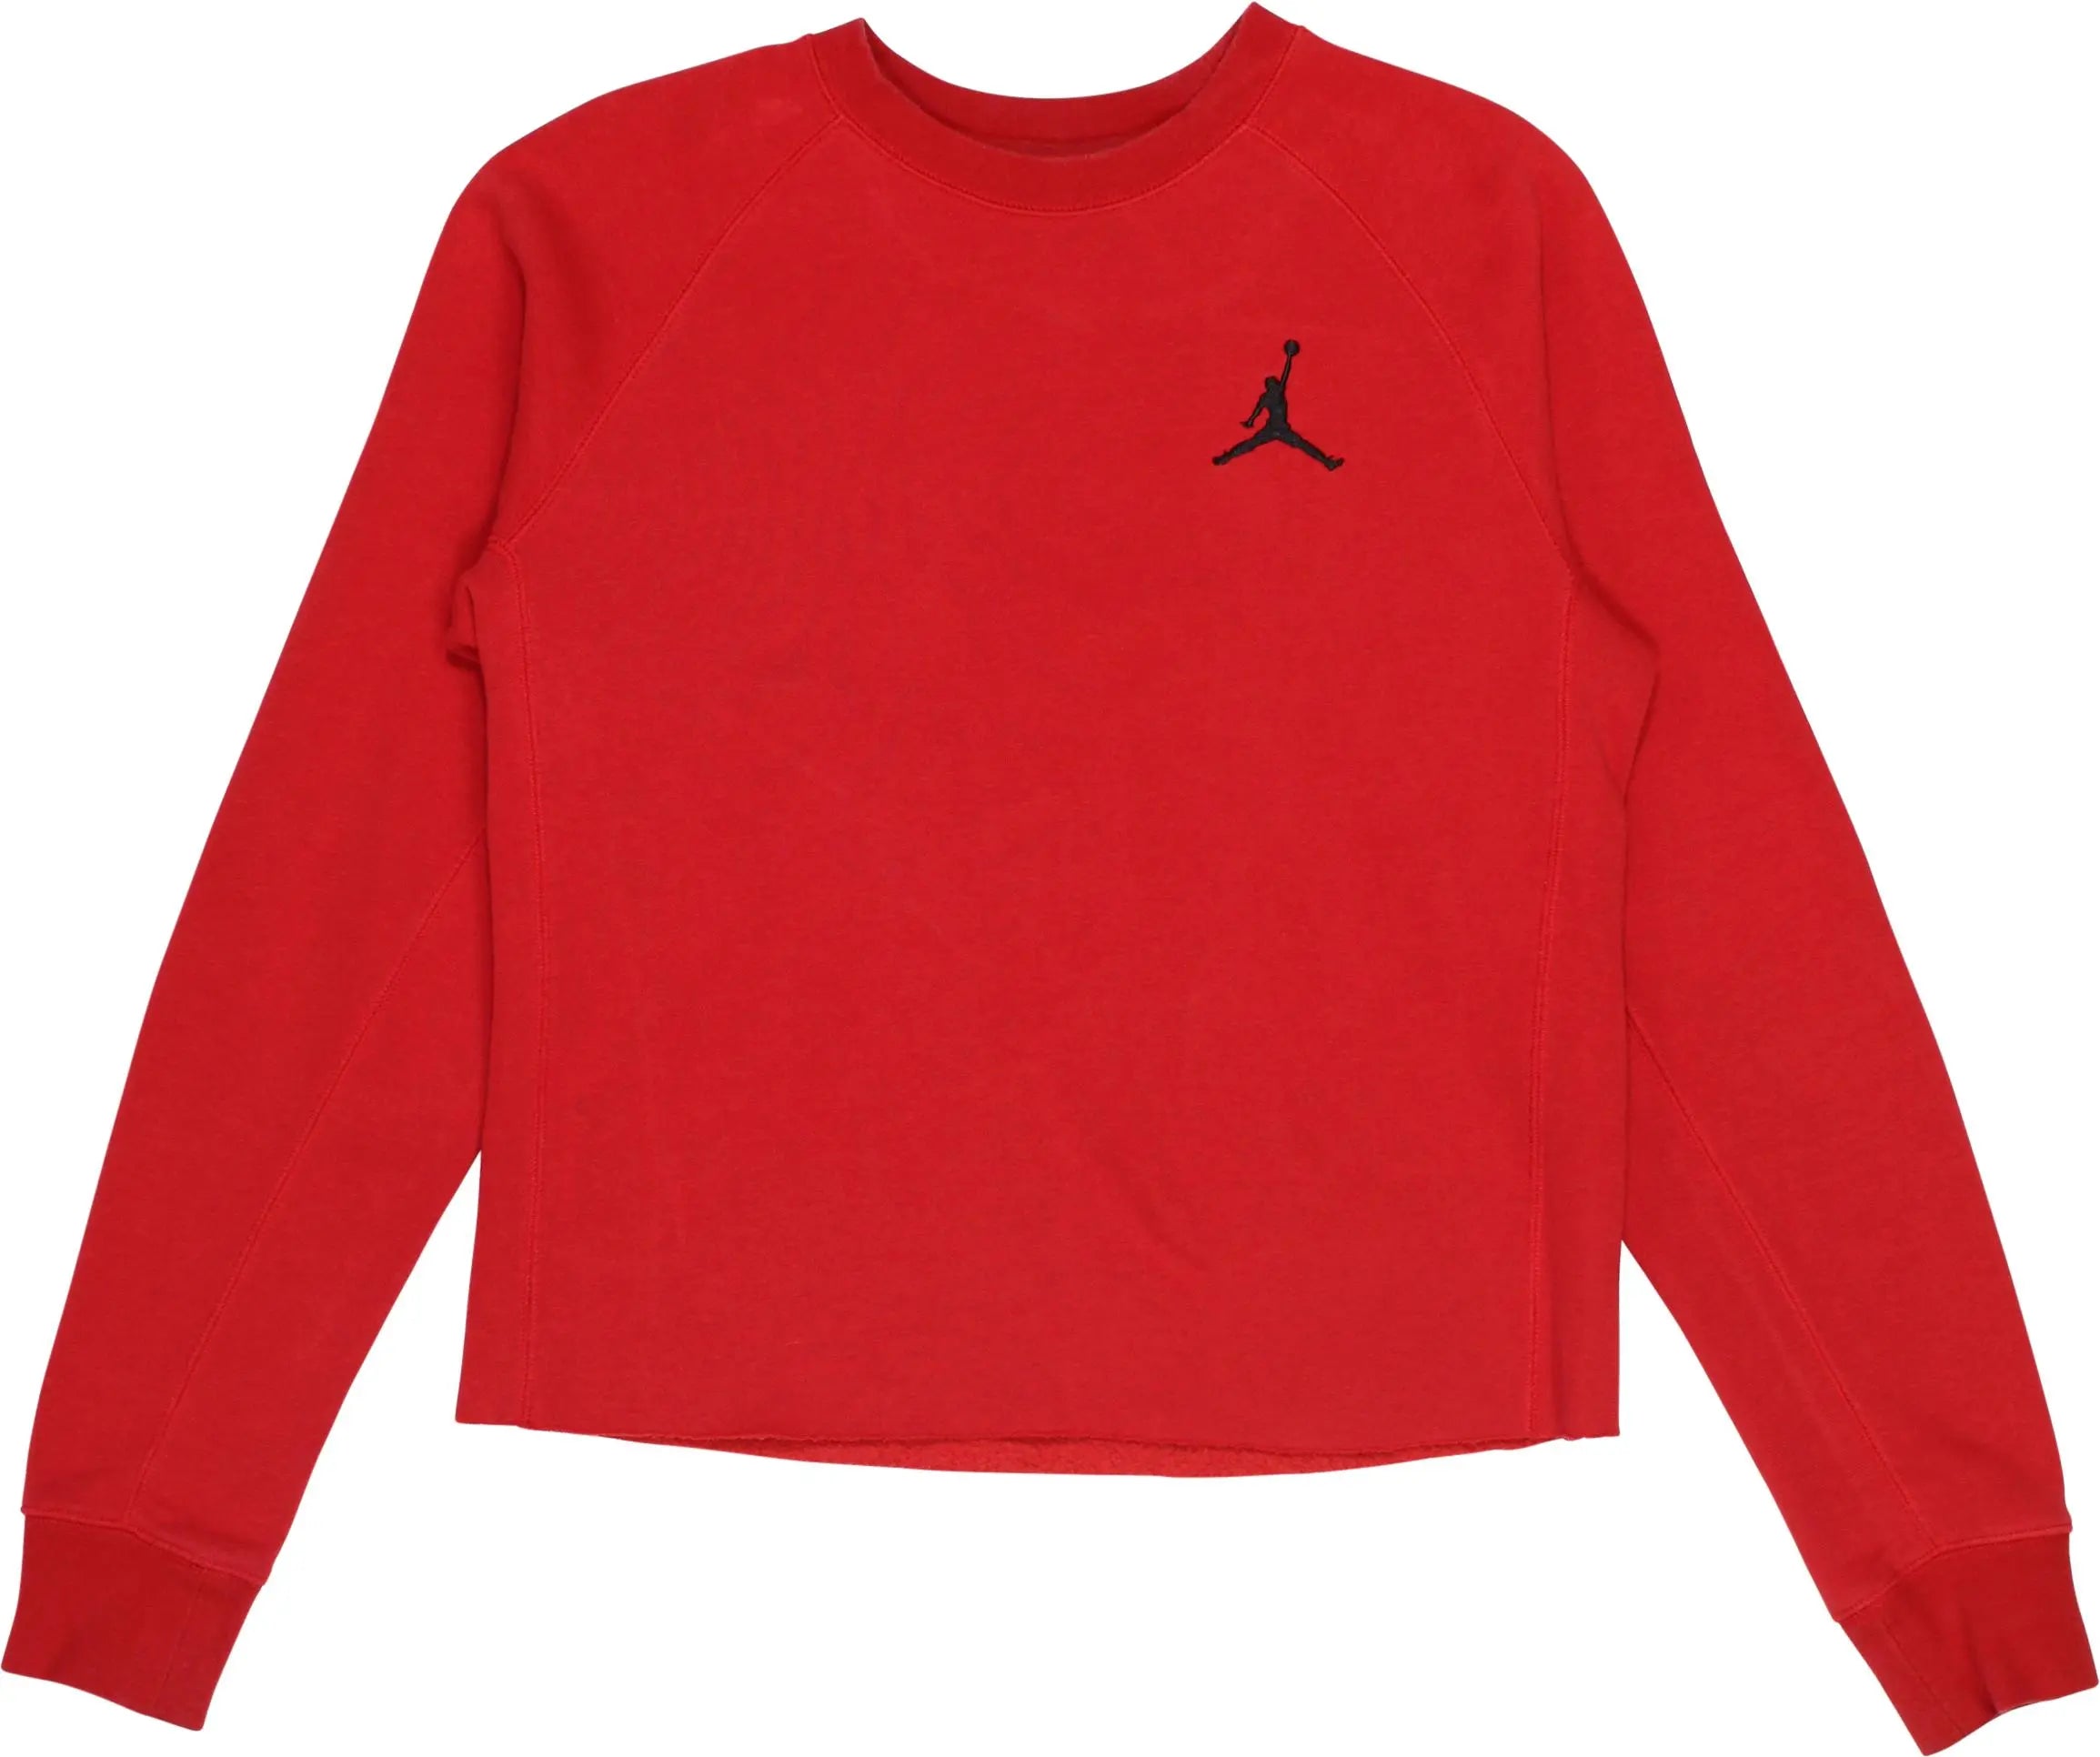 Nike - Red Nike Jordan Sweatshirt- ThriftTale.com - Vintage and second handclothing